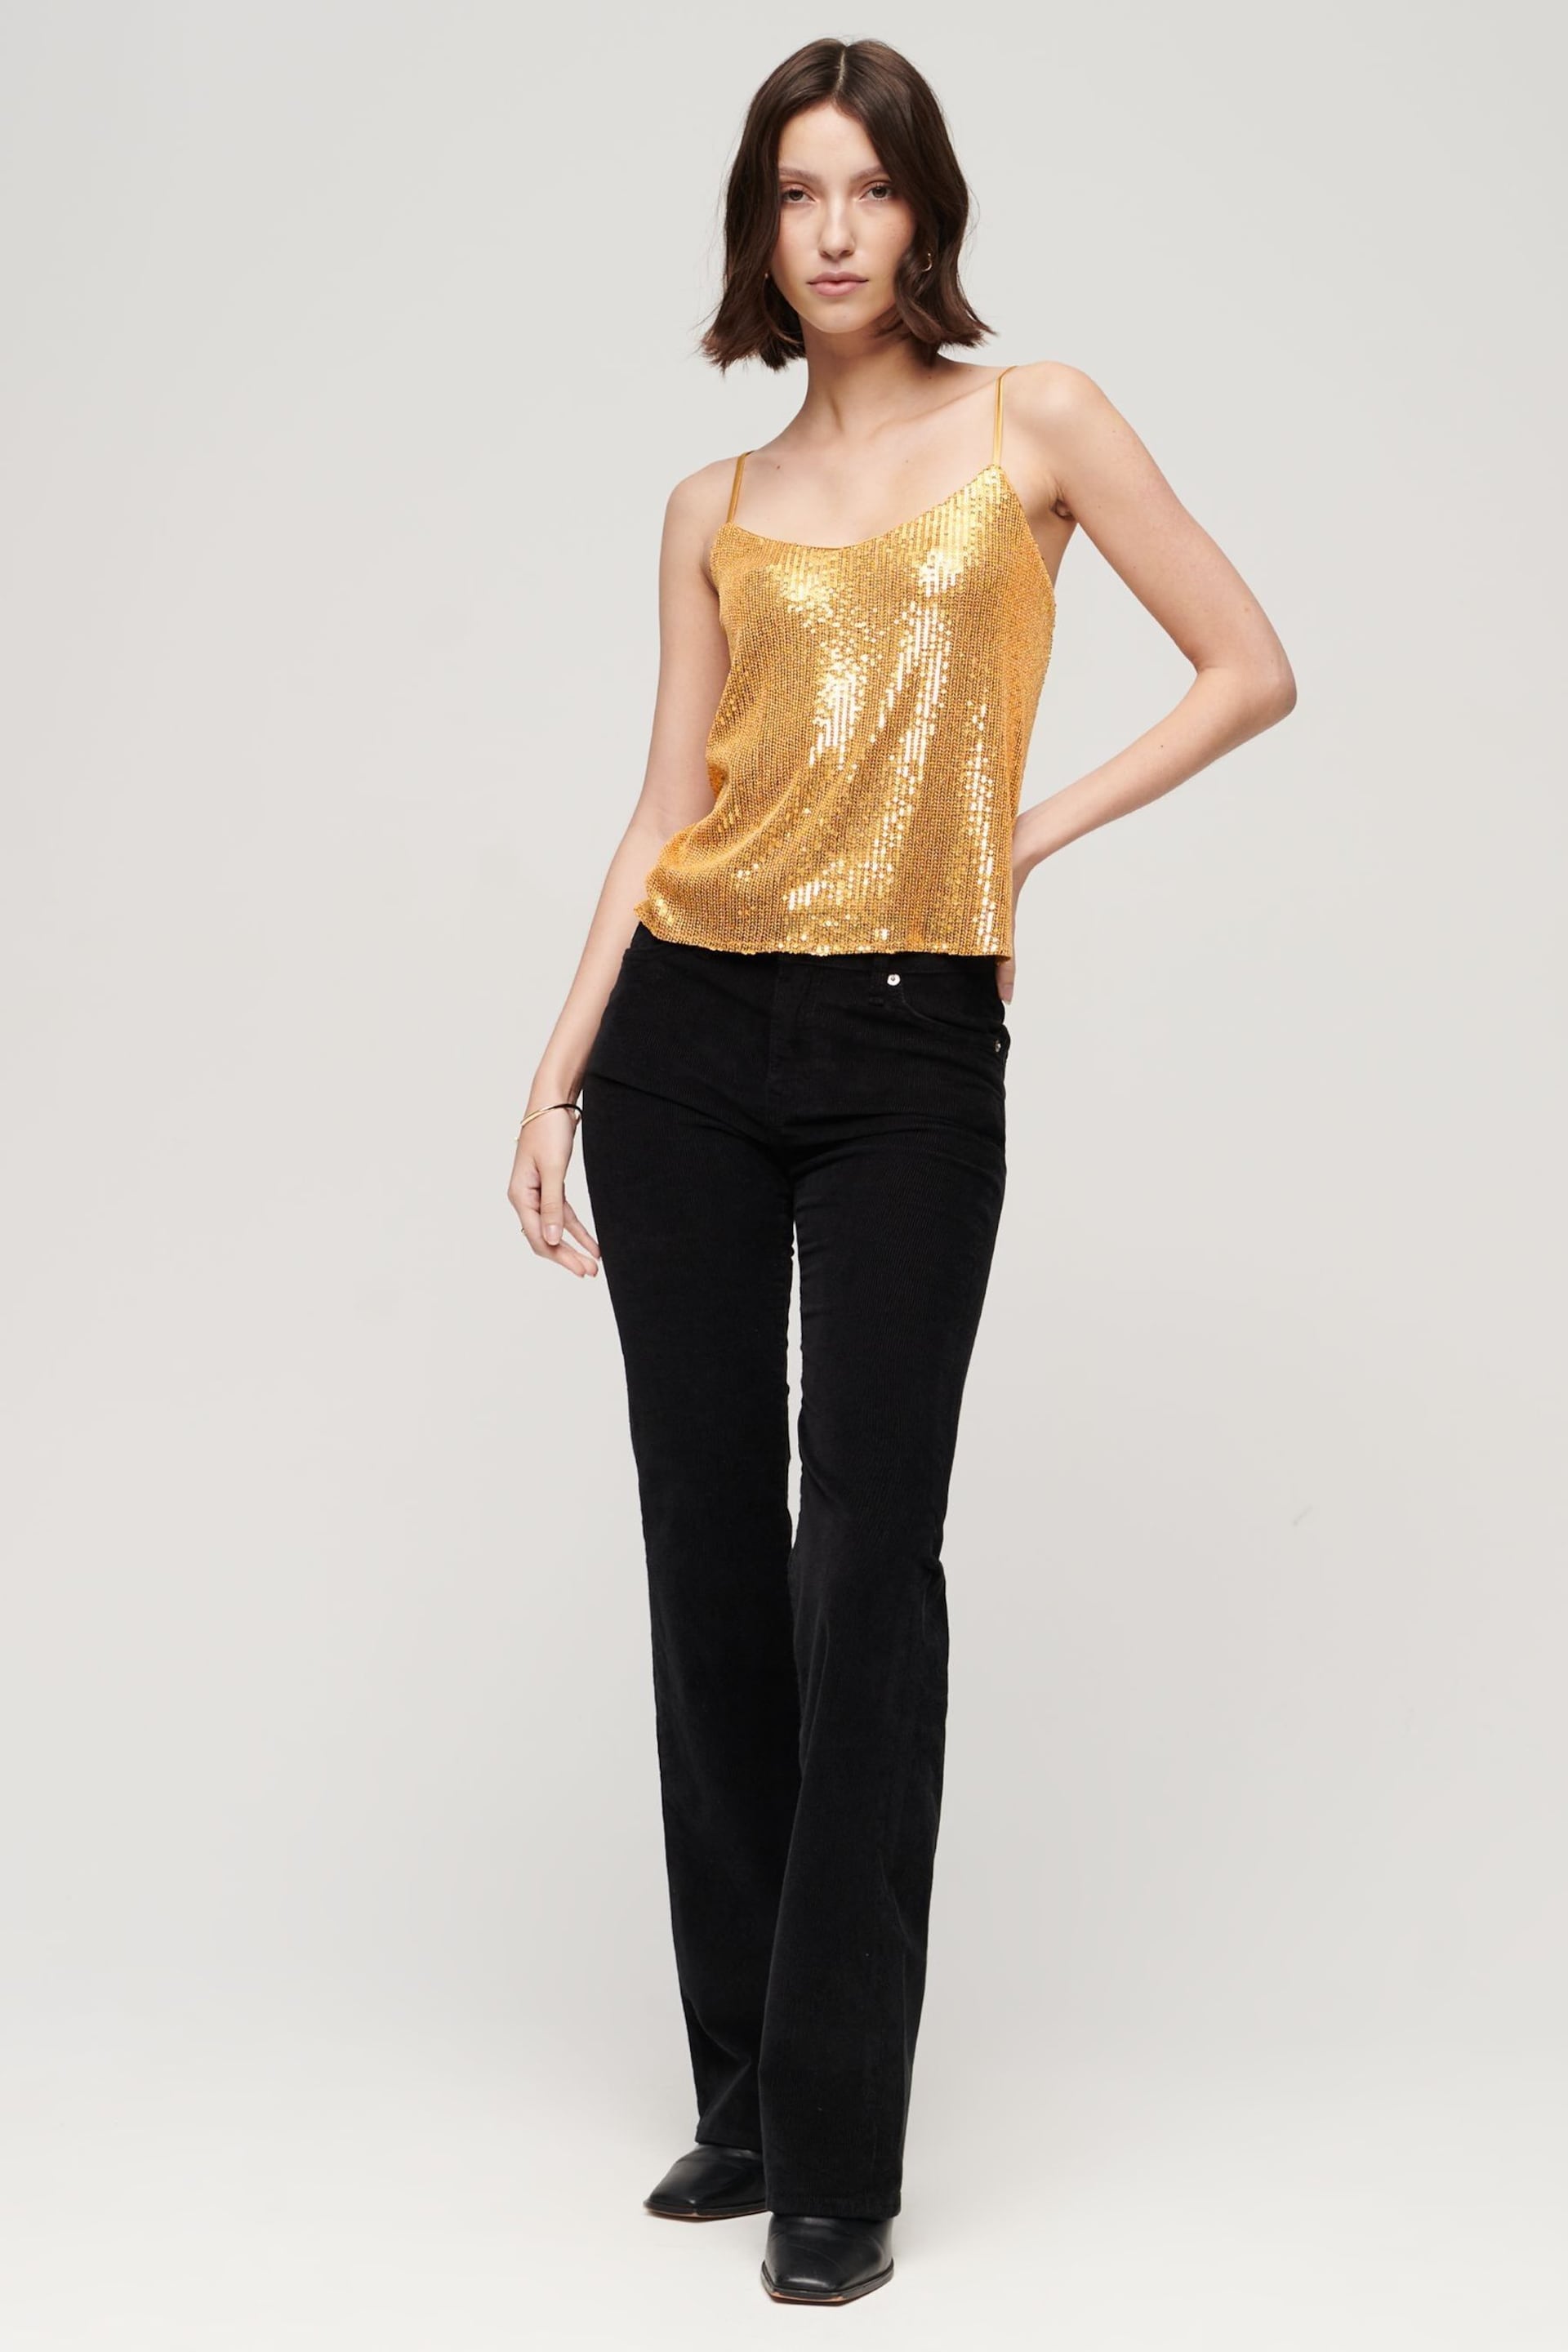 Superdry Gold Sequin Cami Vest Top - Image 2 of 5